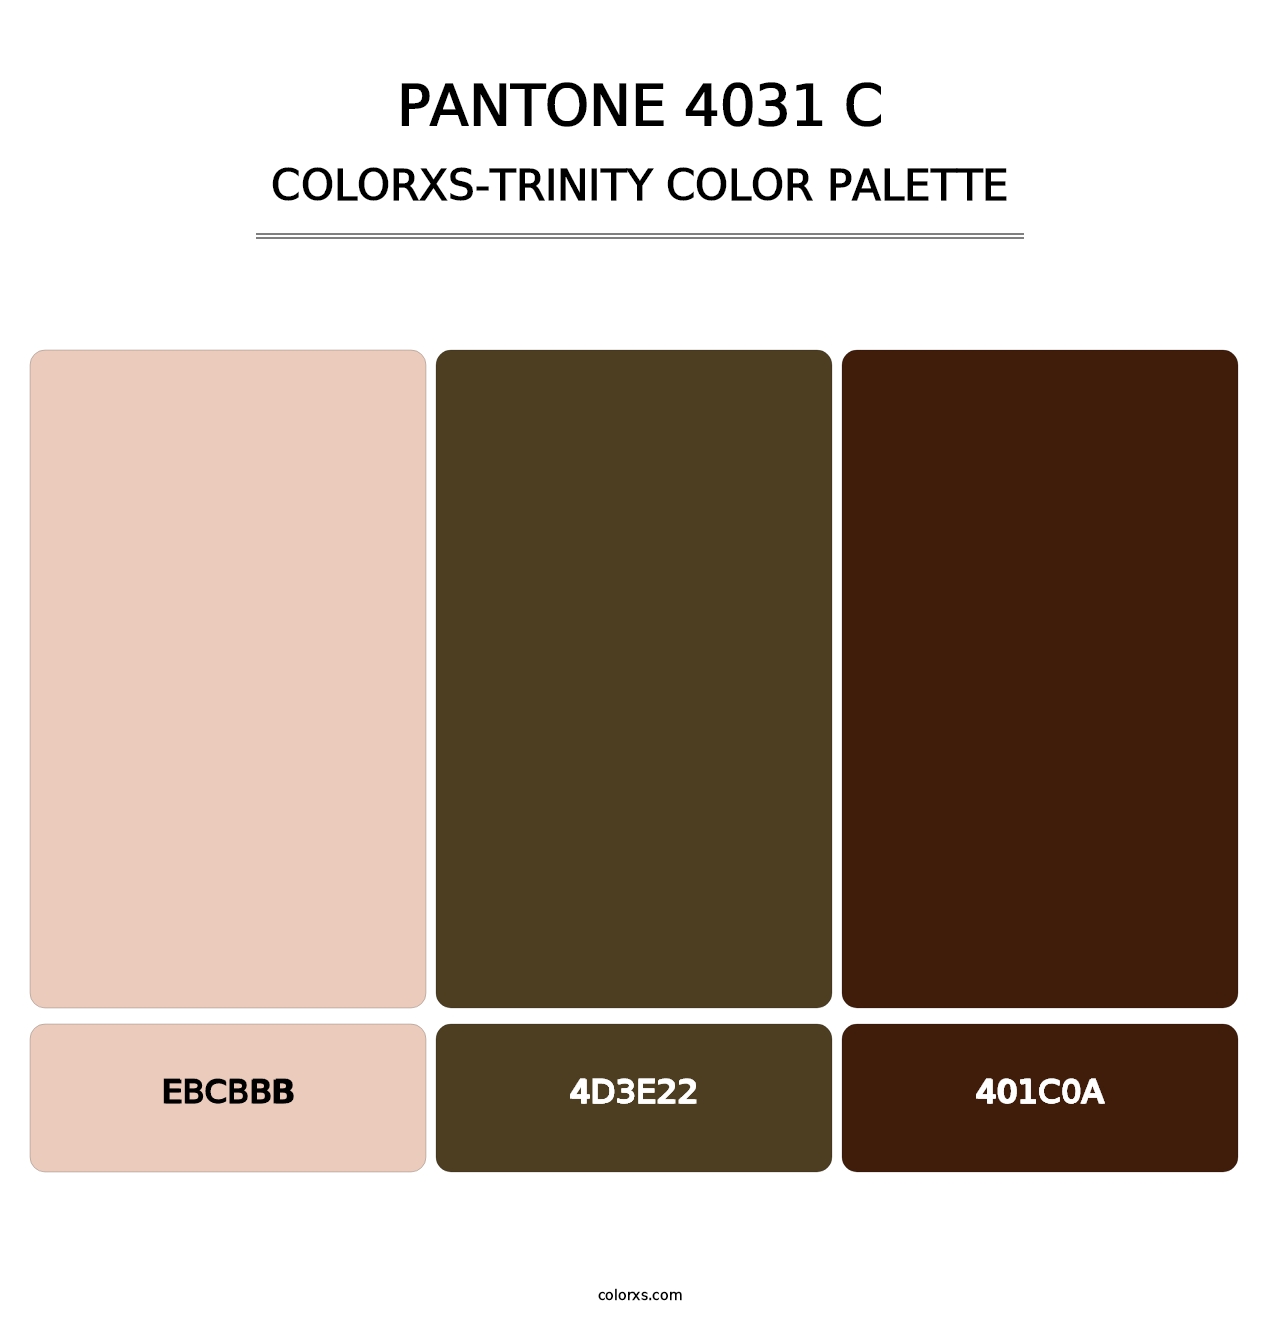 PANTONE 4031 C - Colorxs Trinity Palette